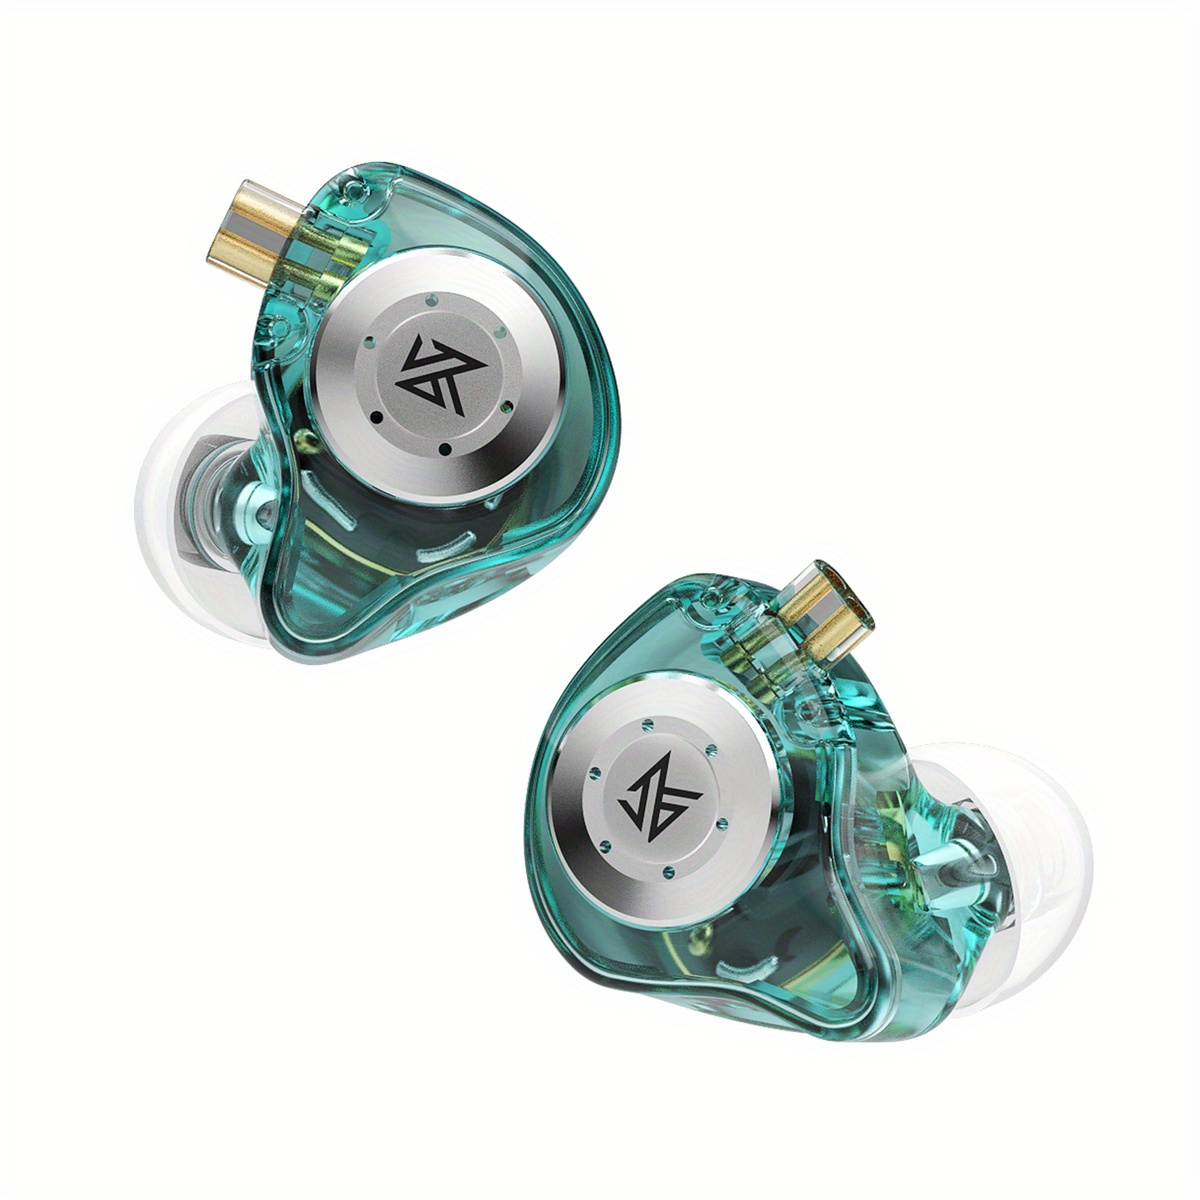 KZ-EDX Pro 3.5mm Wired Headphones HIFI Bass Earbuds Games Earphones with Mic